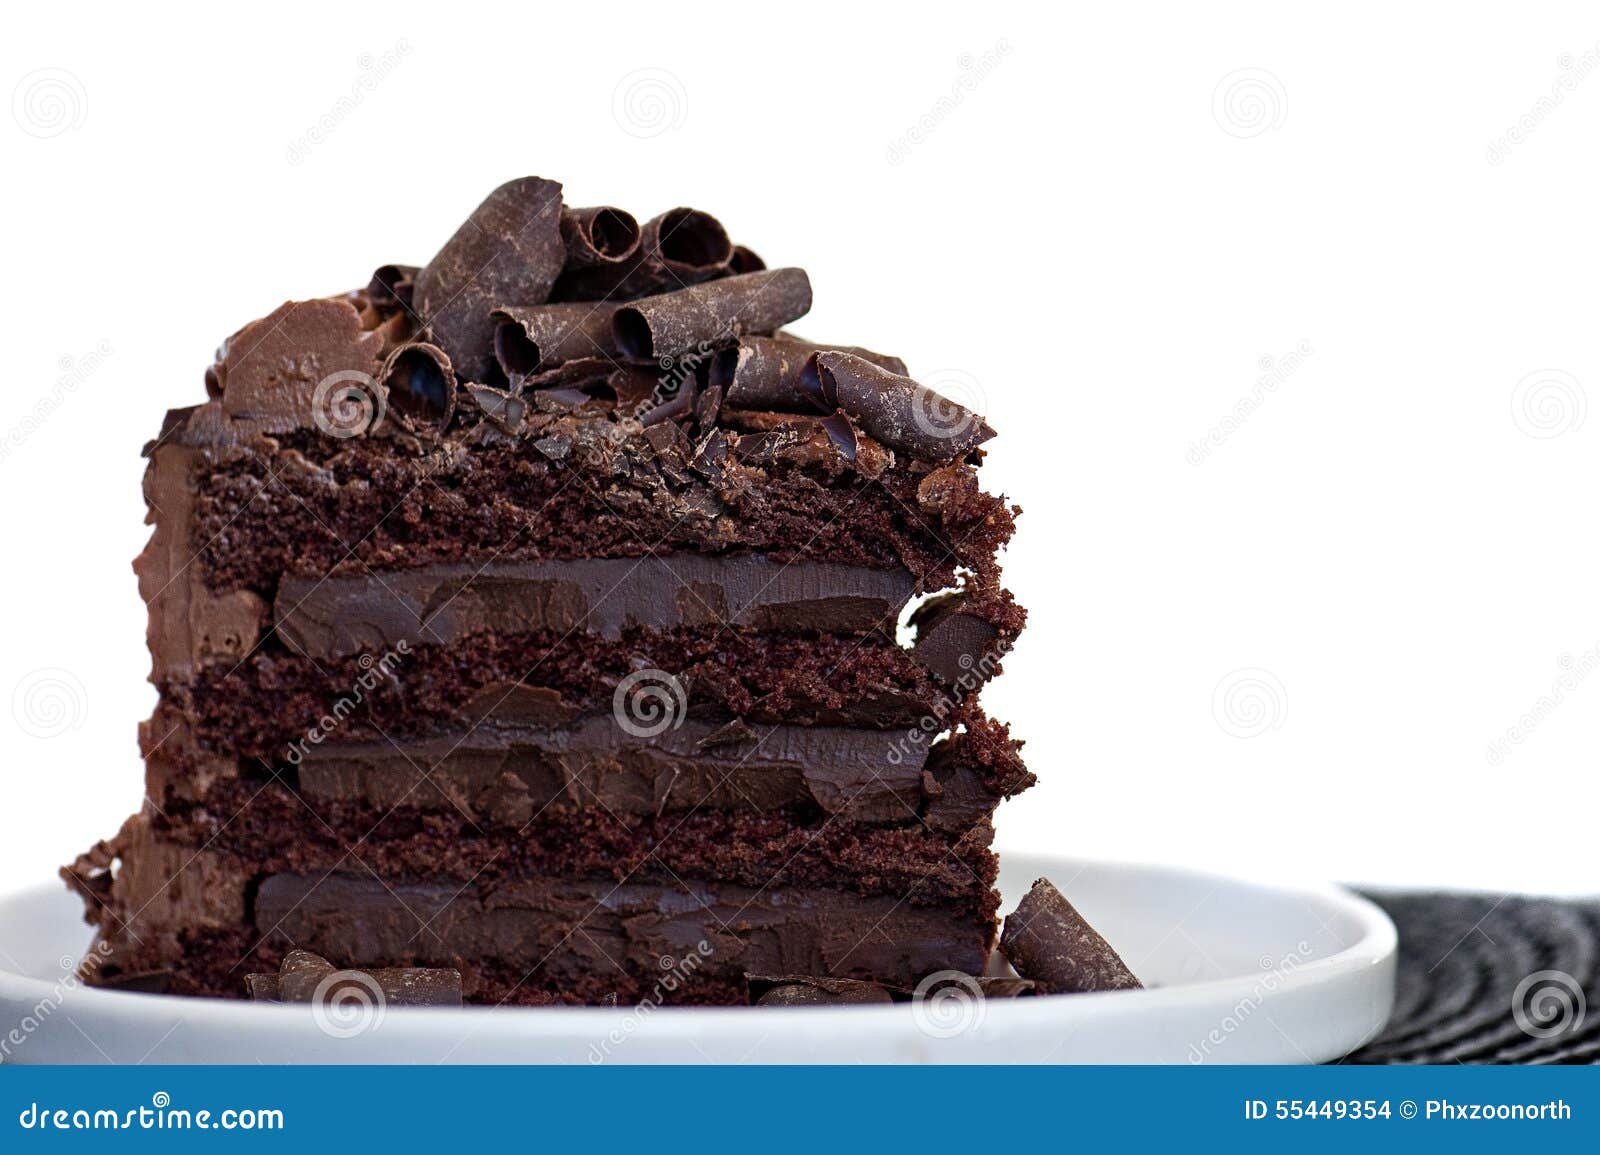 slice-chocolate-cake-white-plate-isolated-white-background-55449354.jpg